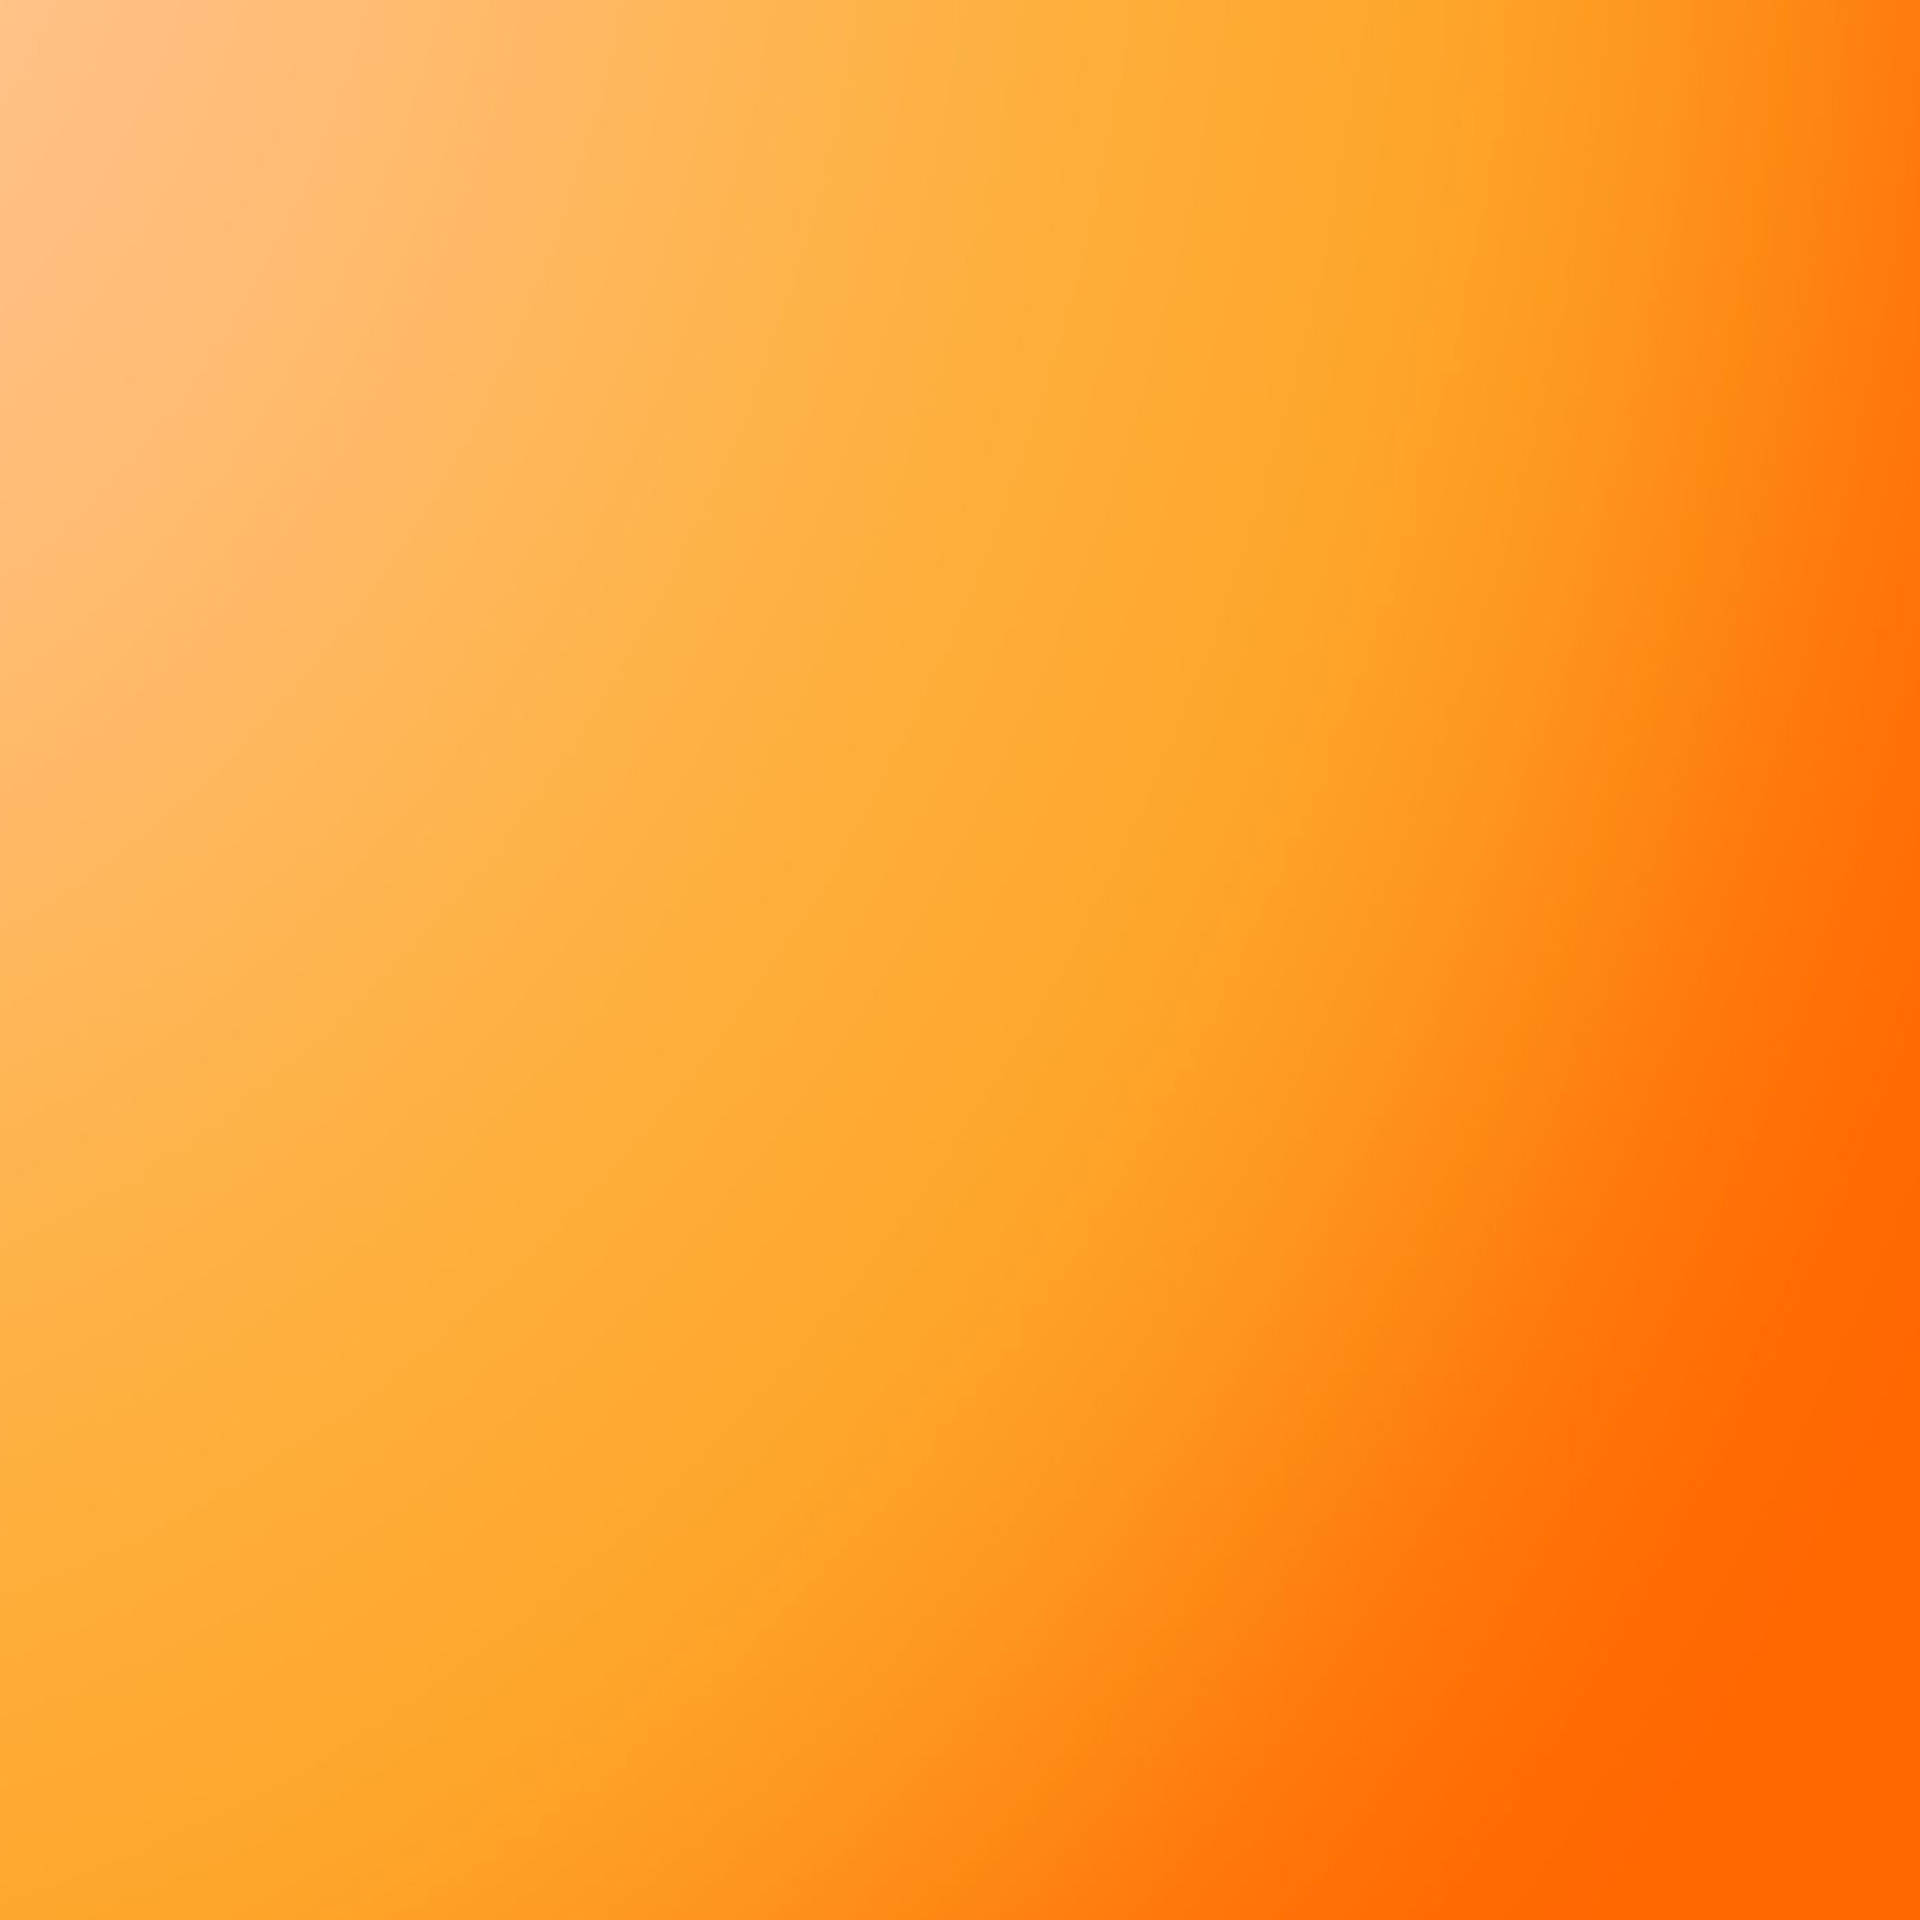 Solid Tangerine Orange Background Wallpaper